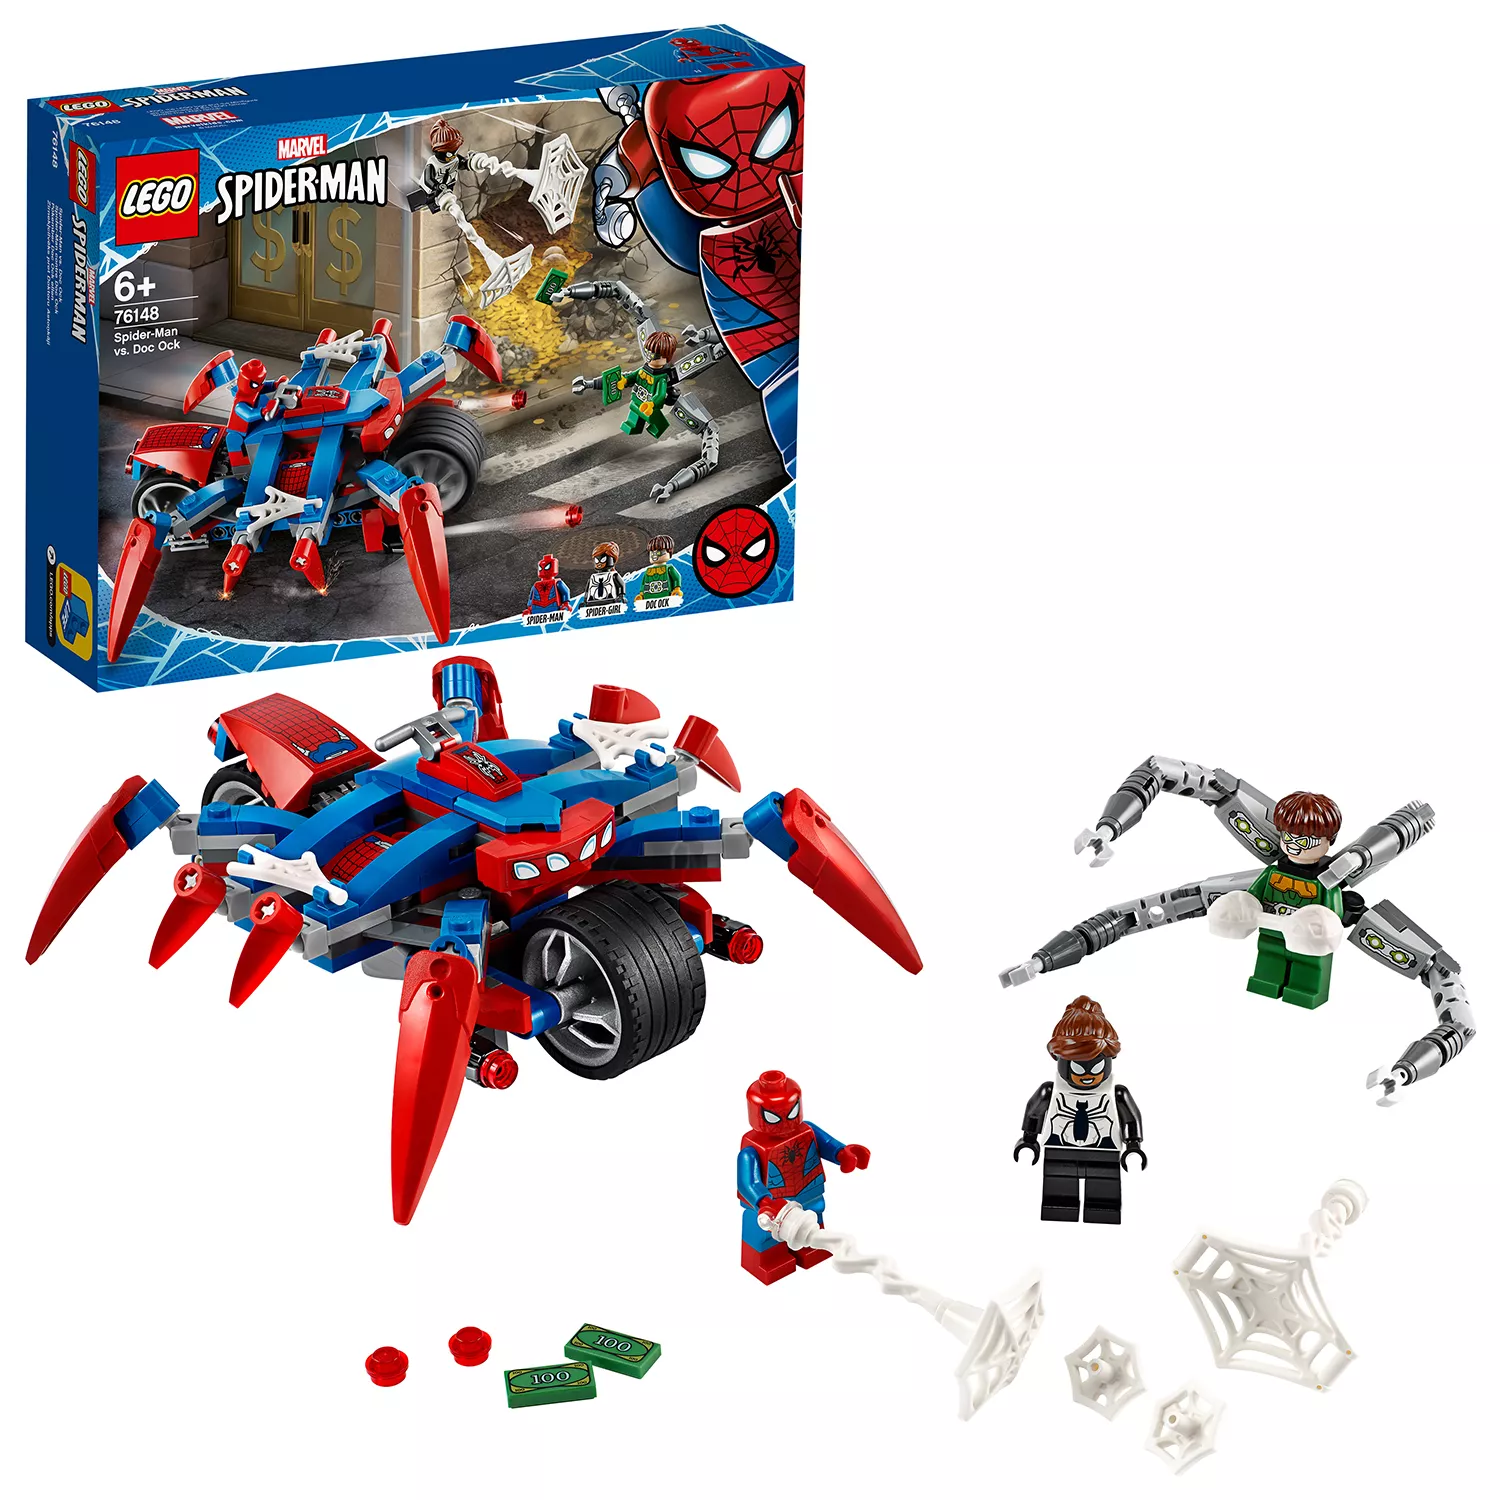 LEGO Marvel Super Heroes Spider-Man vs. Doc Ock - 76148